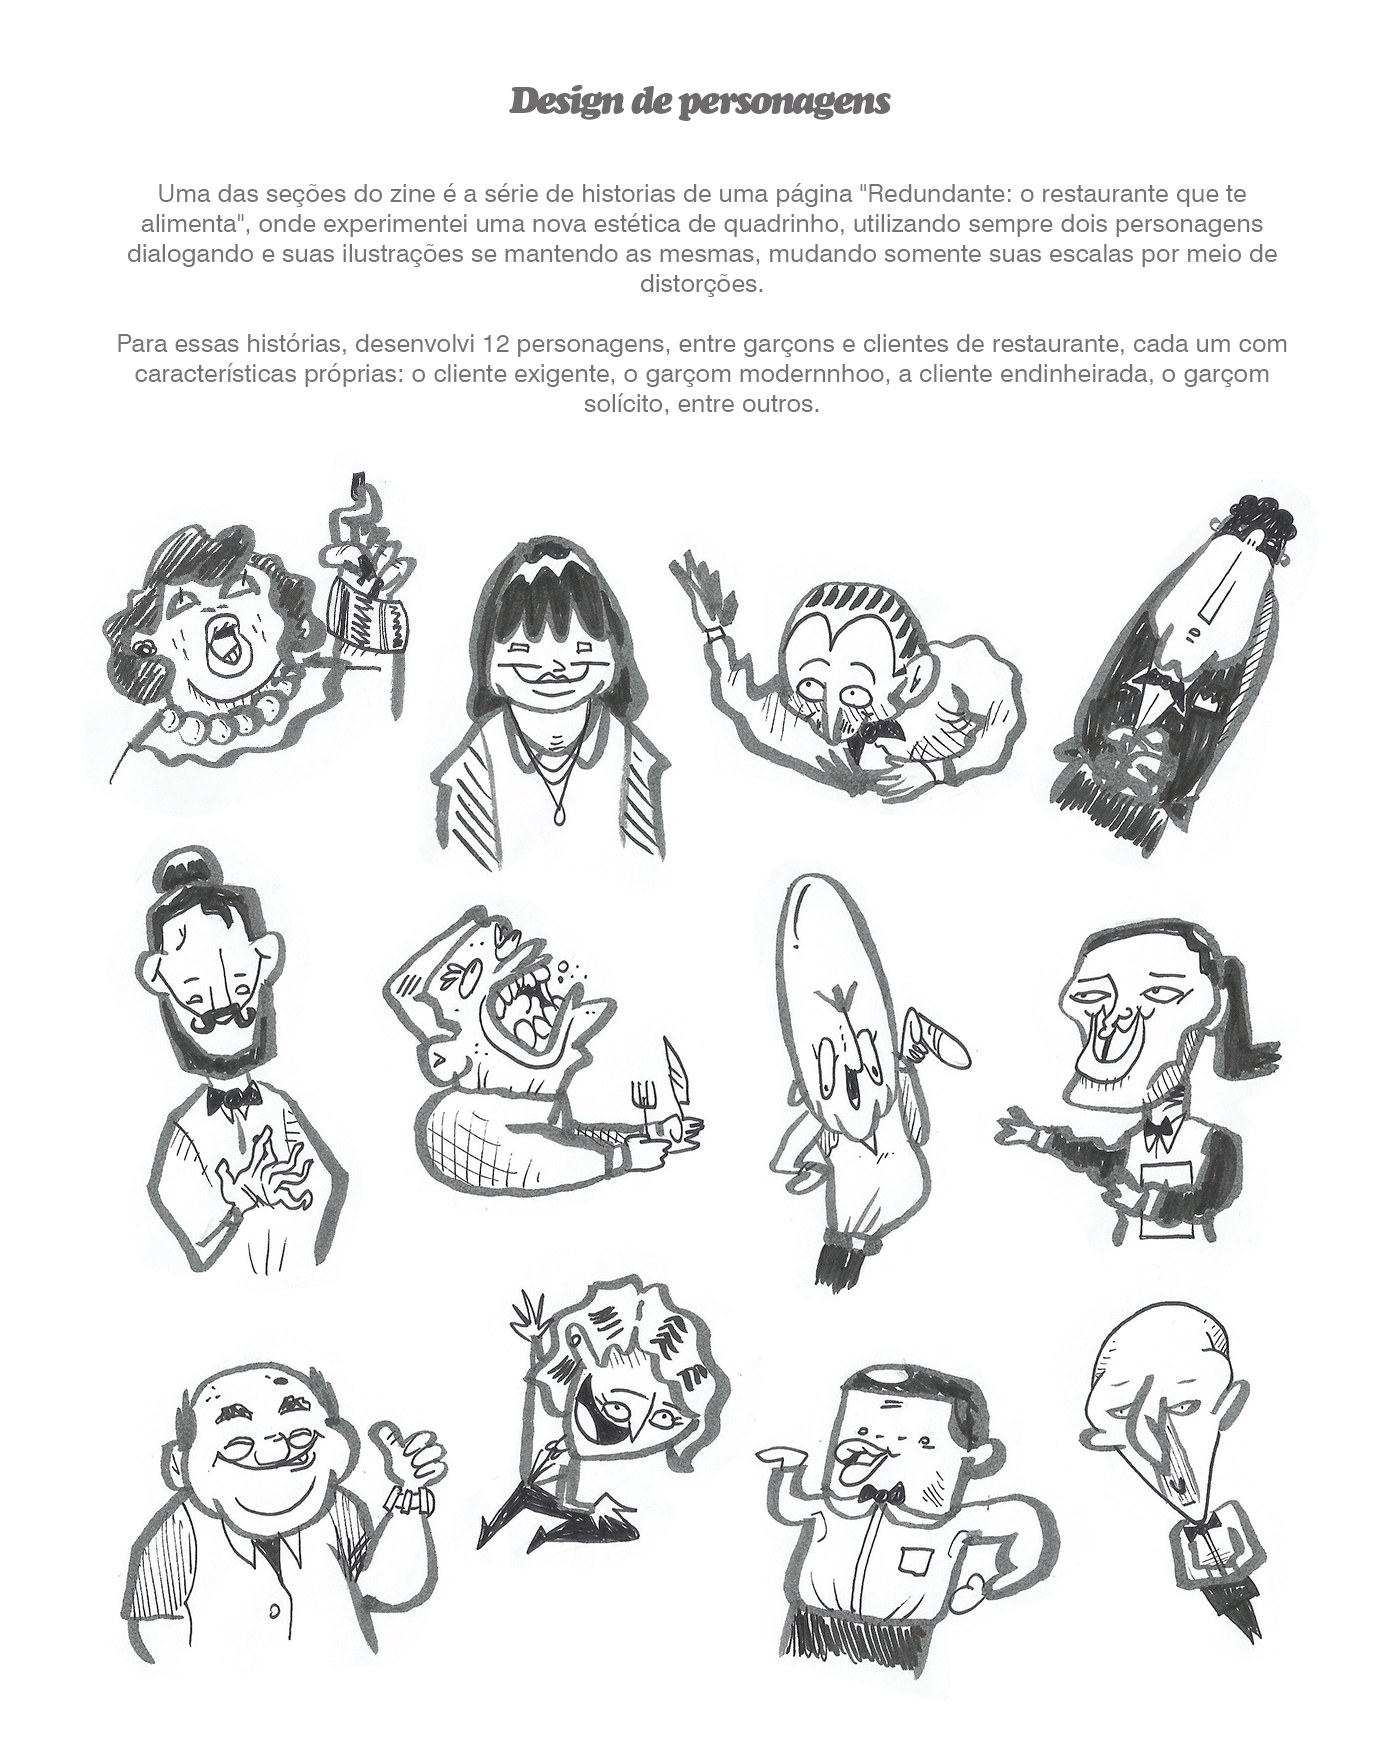 comics edition publication publishing design storyboard quadrinhos quadrinhos independentes